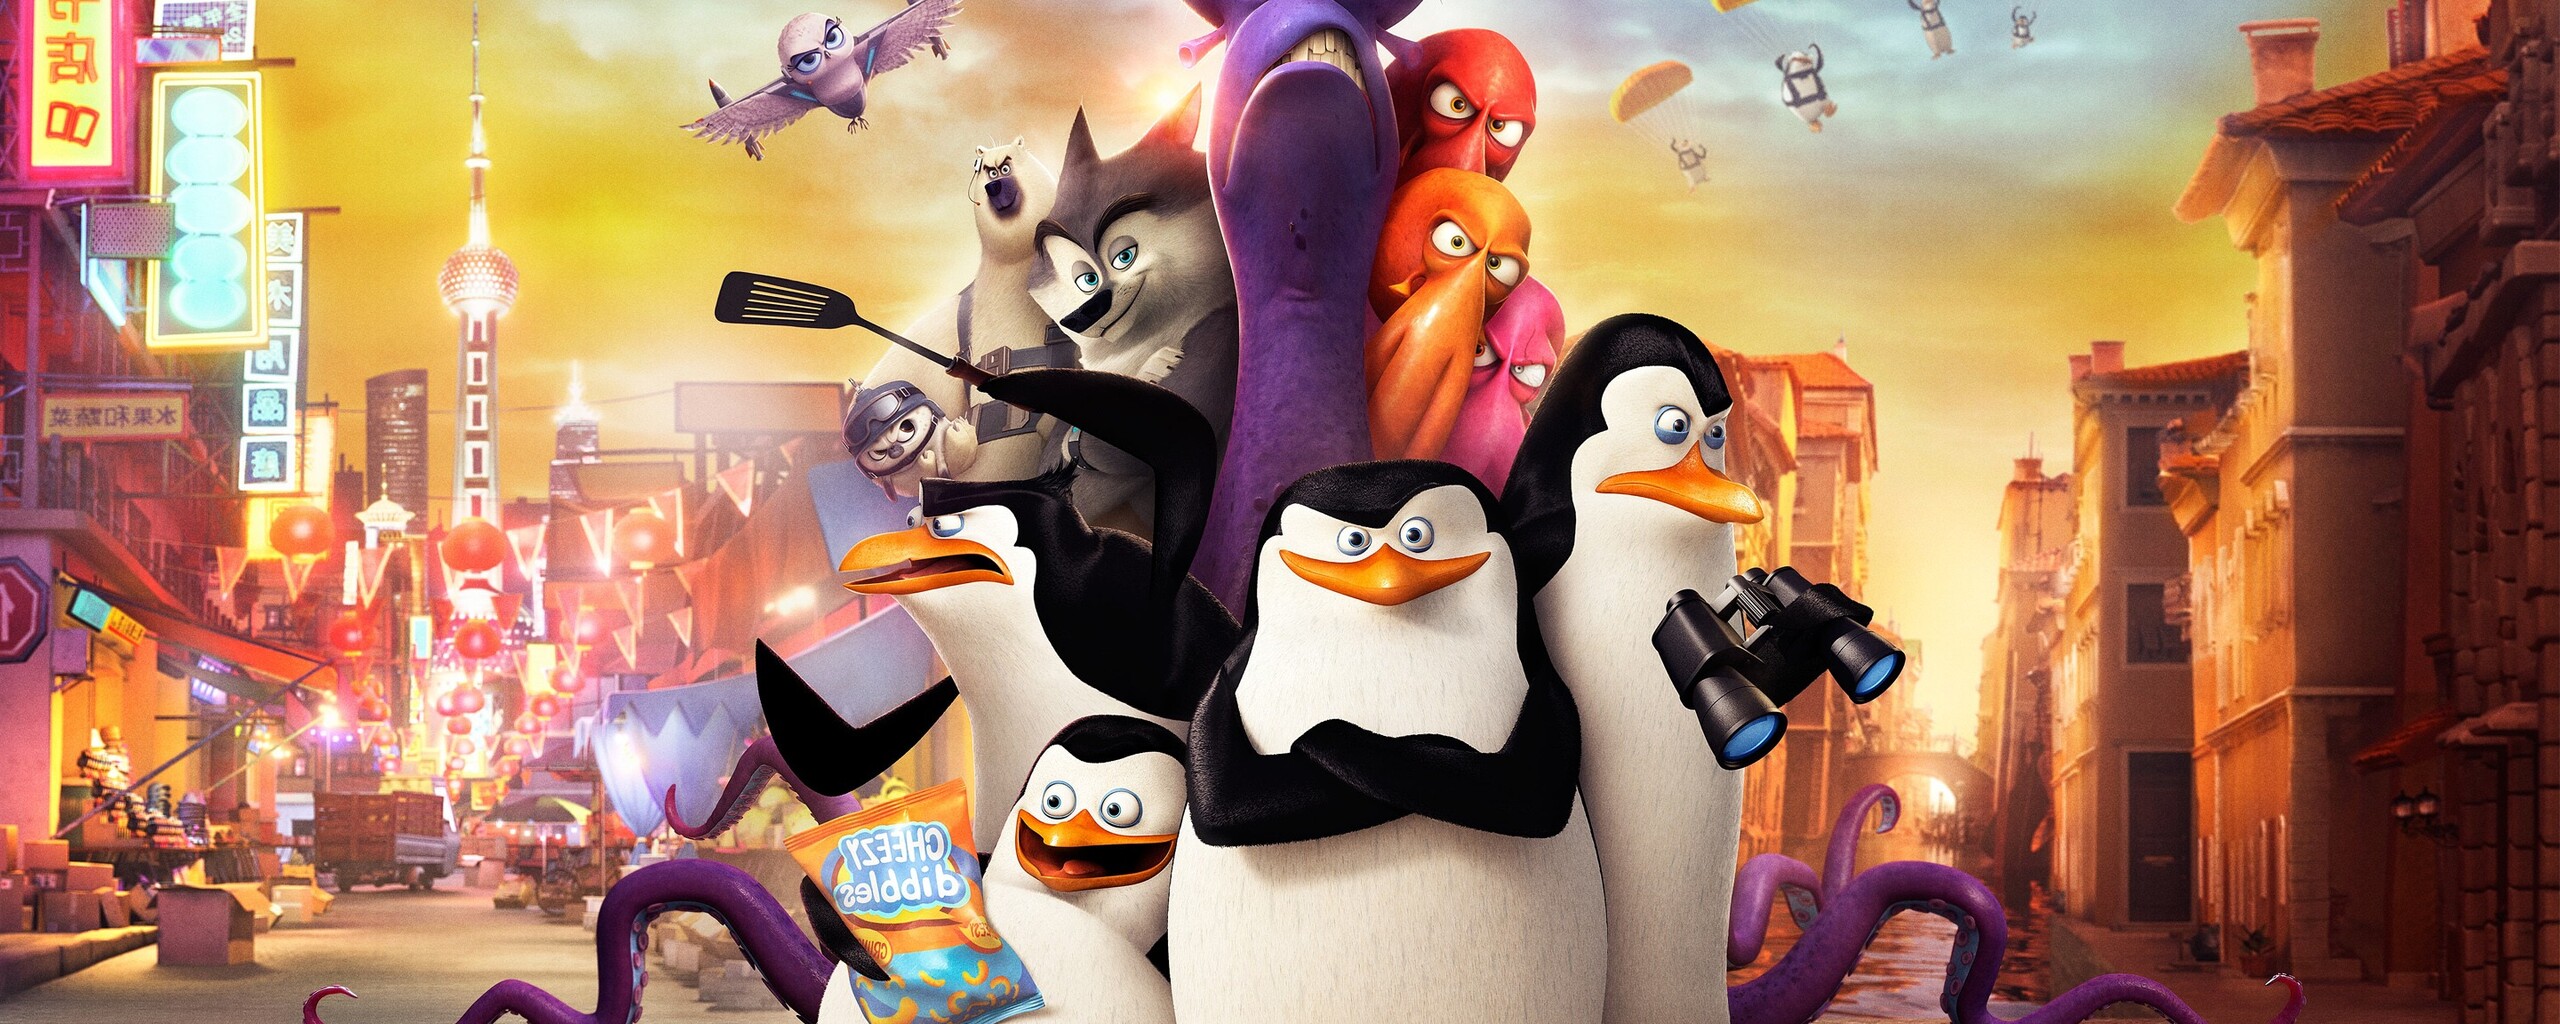 penguins-of-madagascar-movie.jpg